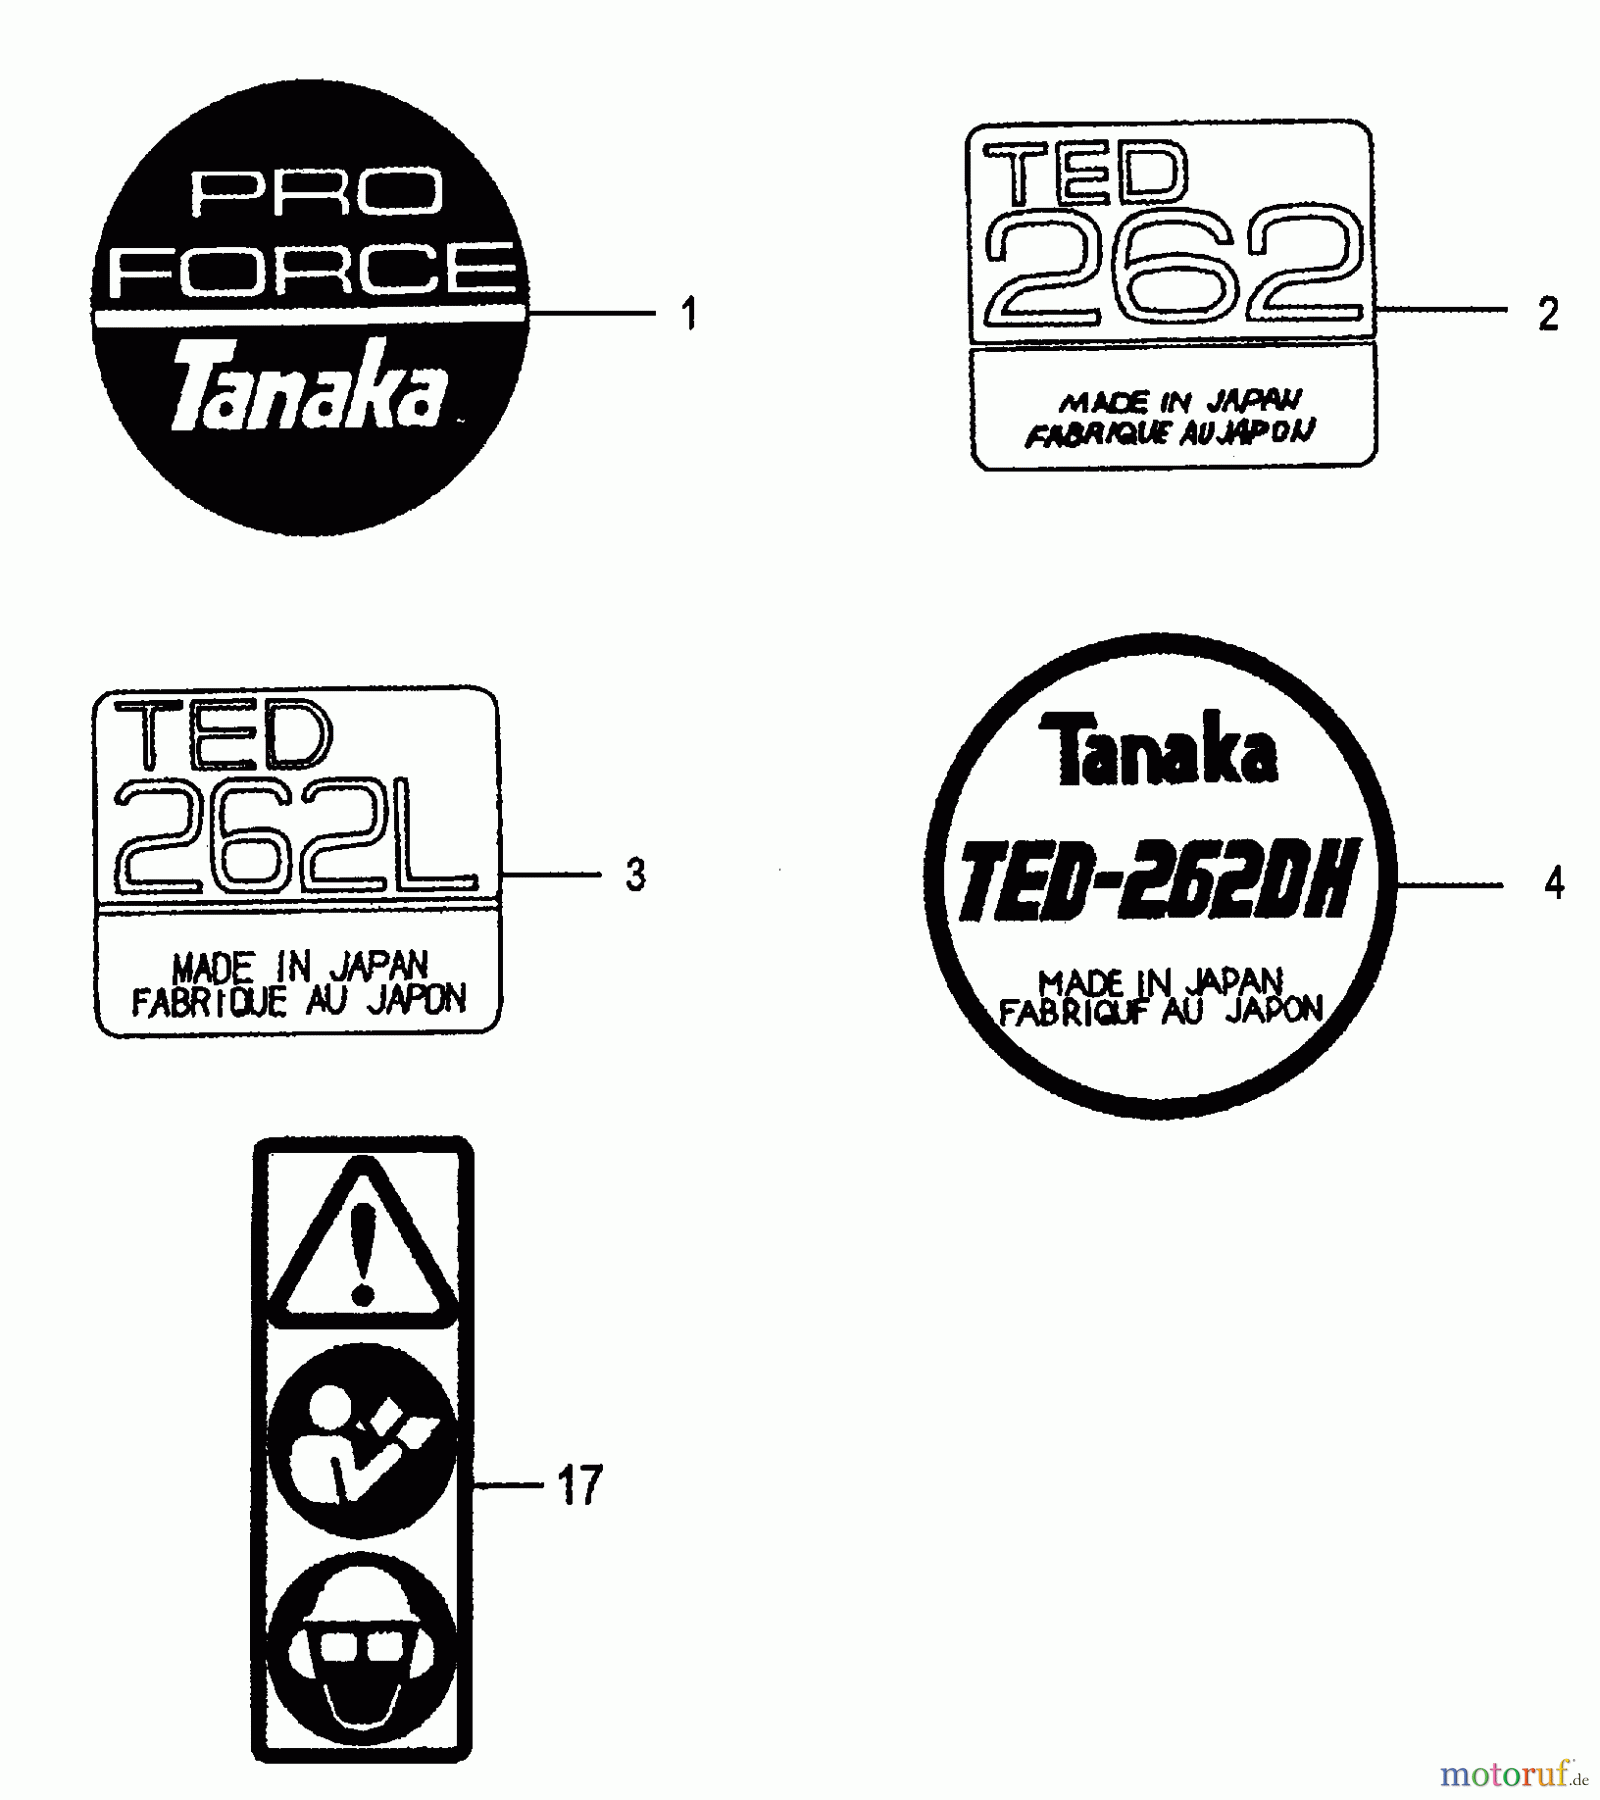  Tanaka Erdbohrer TED-262DH - Tanaka Portable Gas Drill Decals